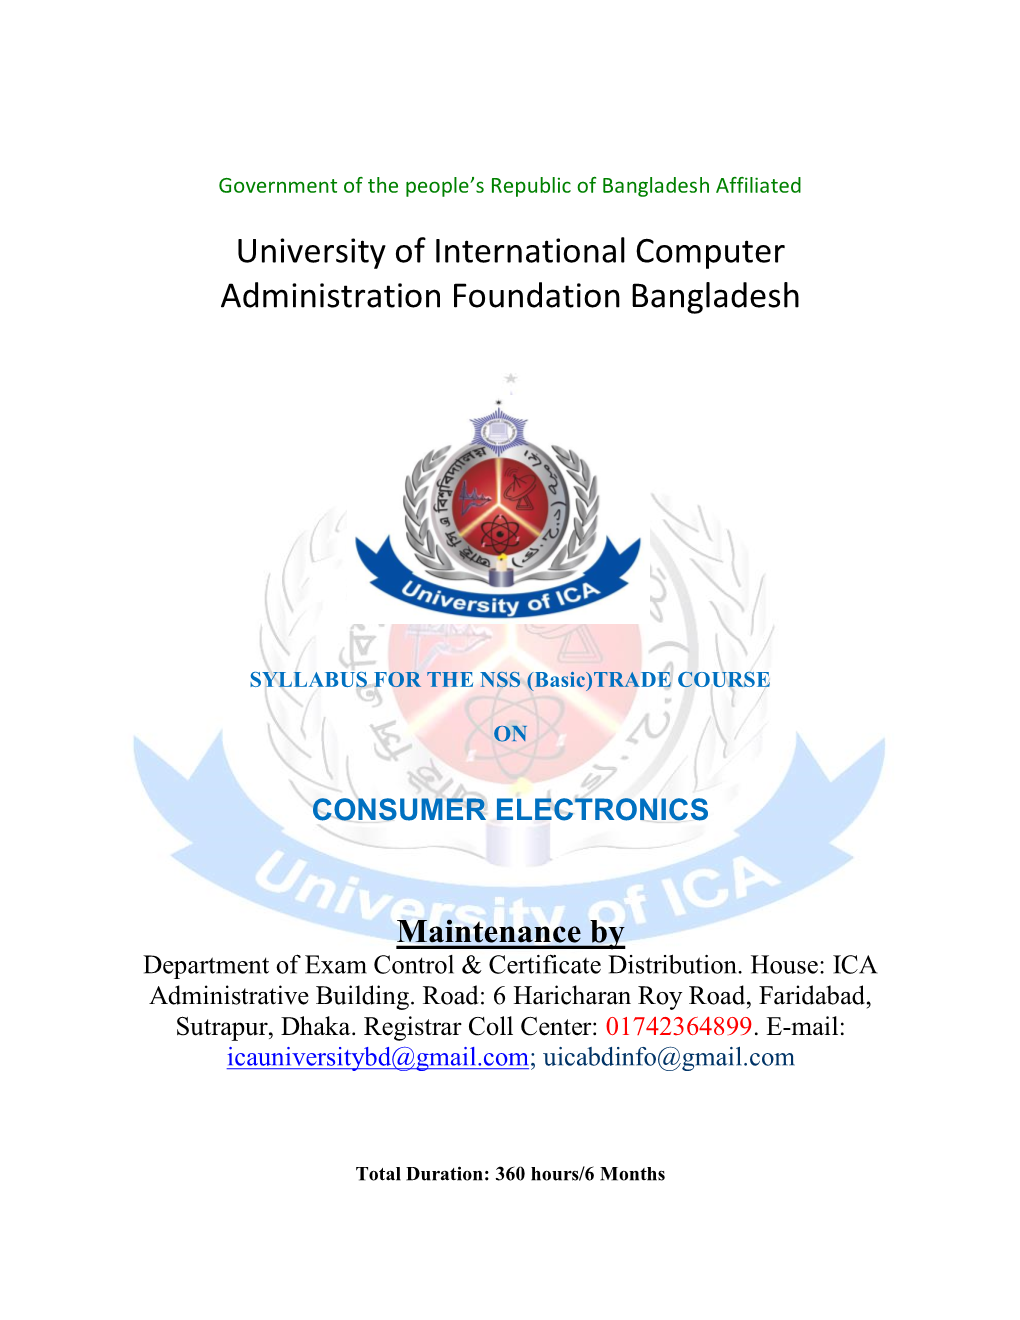 University of International Computer Administration Foundation Bangladesh